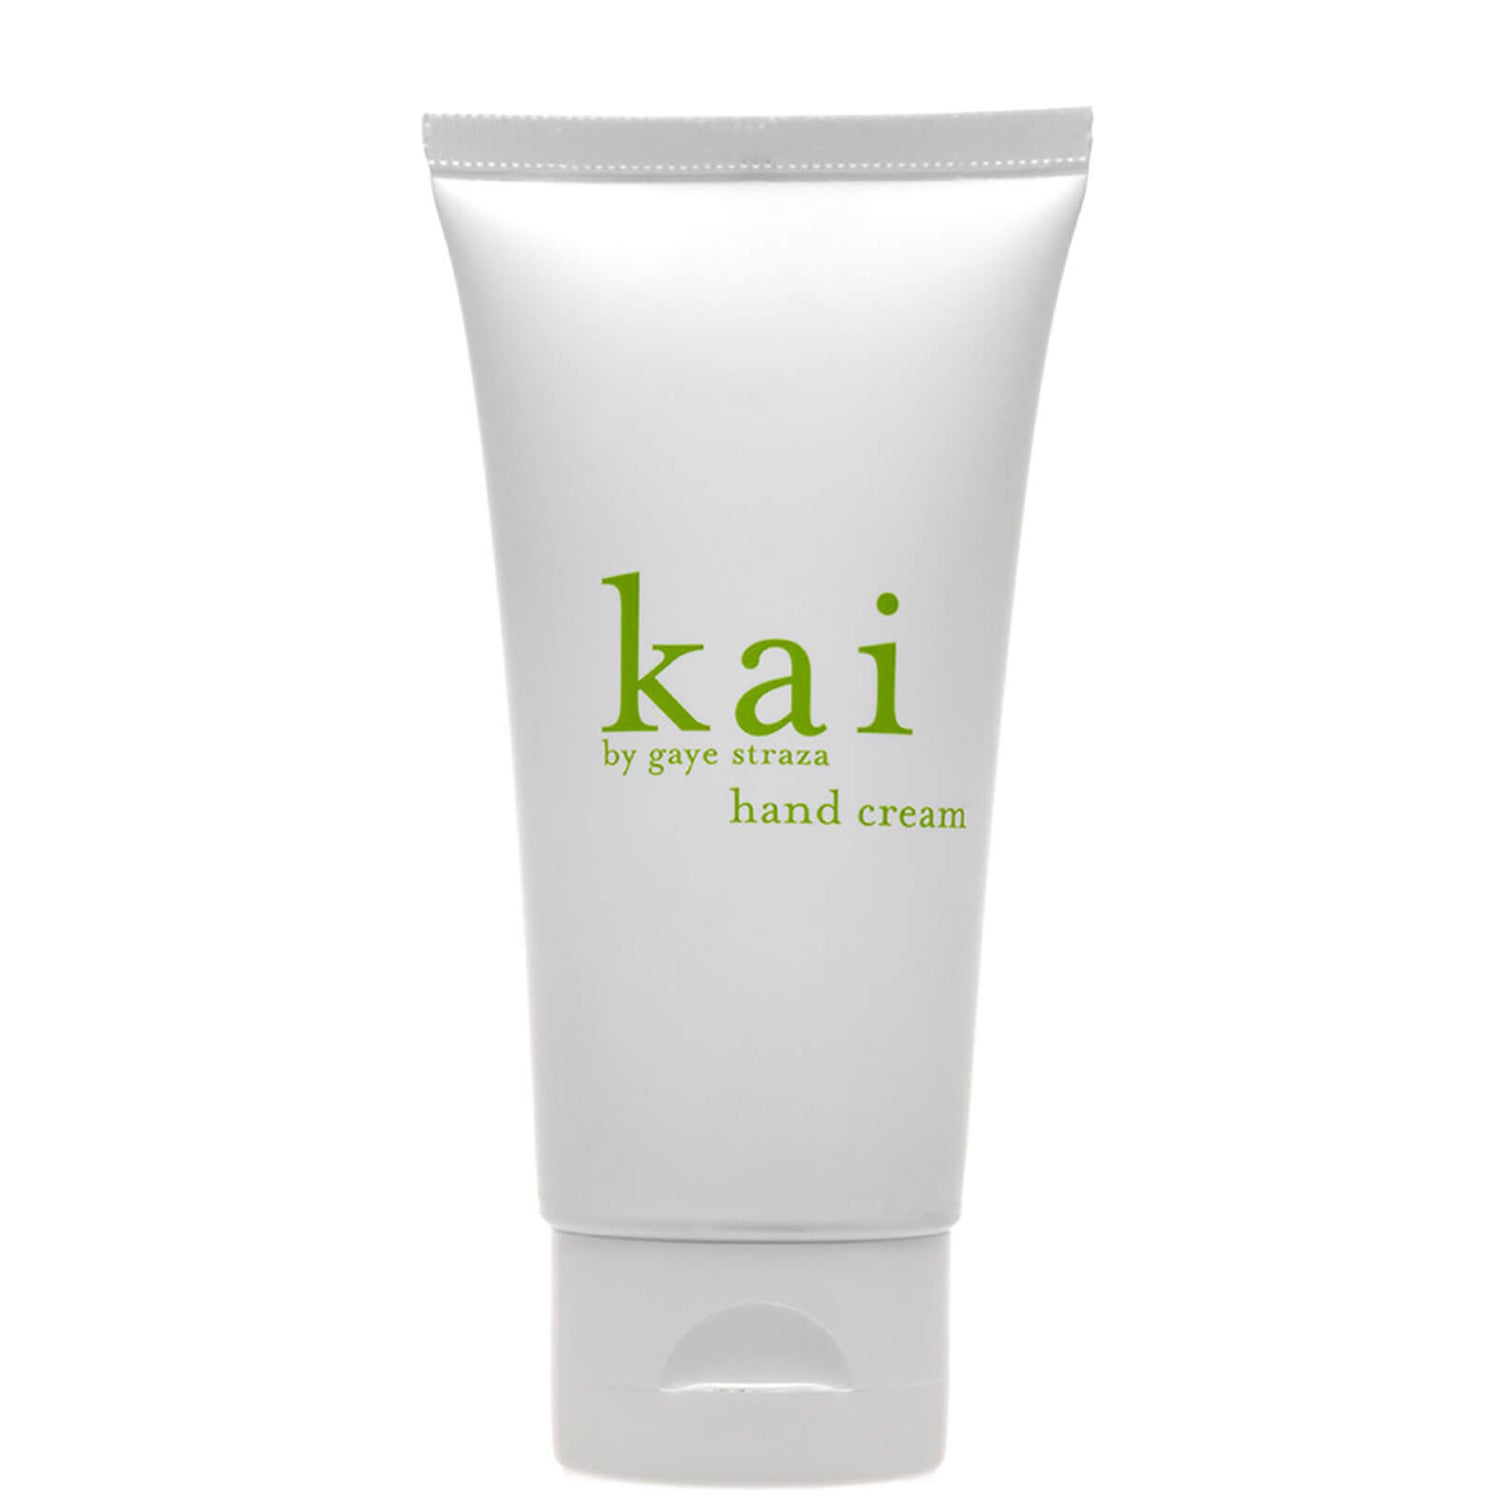 kai Hand Cream (2 fl. oz.)